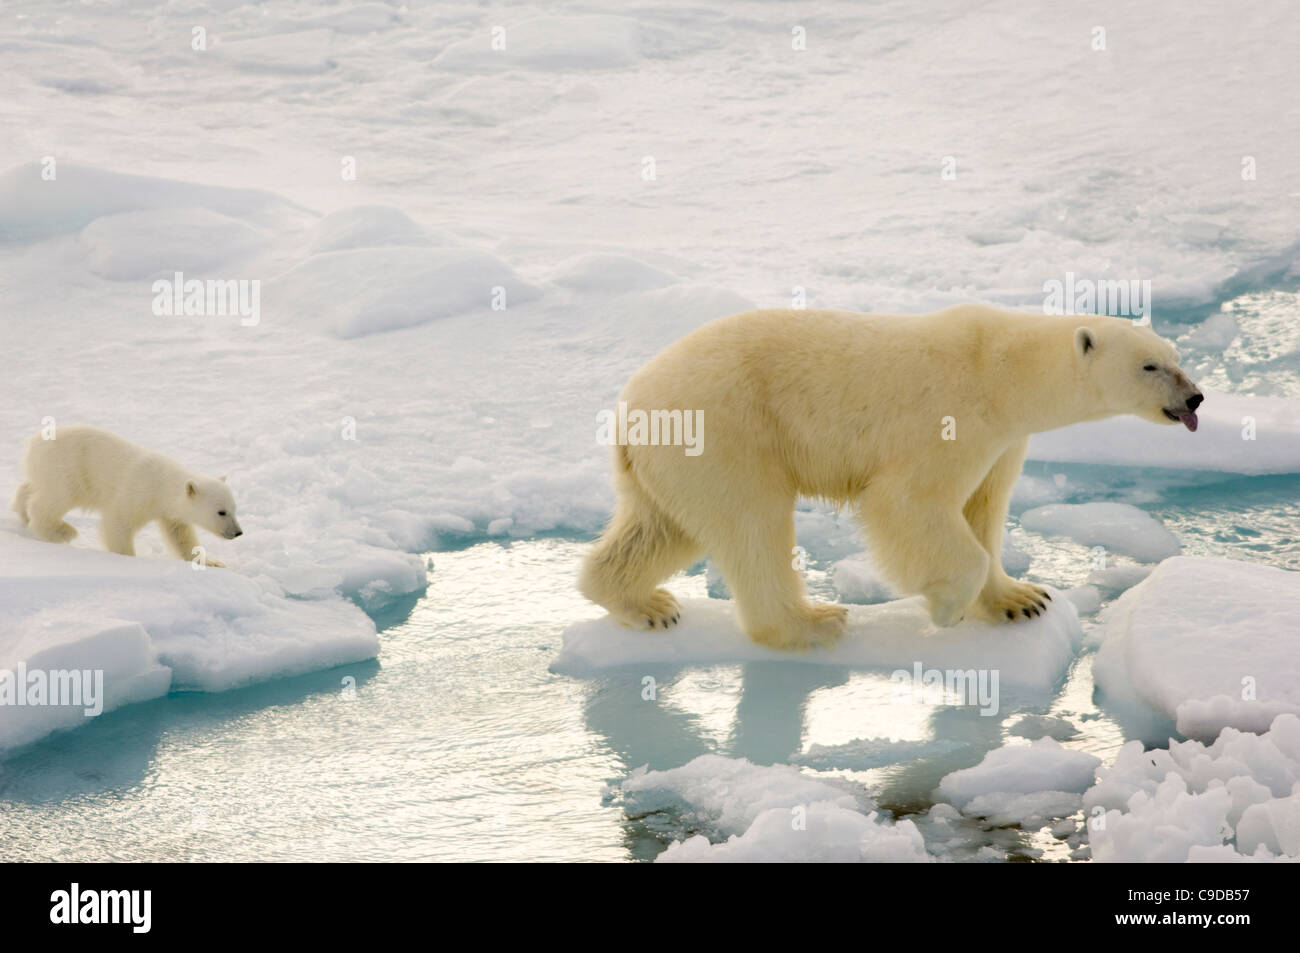 Female Polar Bear  (Ursus maritimus) with a young cub walking on floating drift ice, Freemansundet (between Barentsøya and Edgeøya), Svalbard Archipelago, Norway Stock Photo